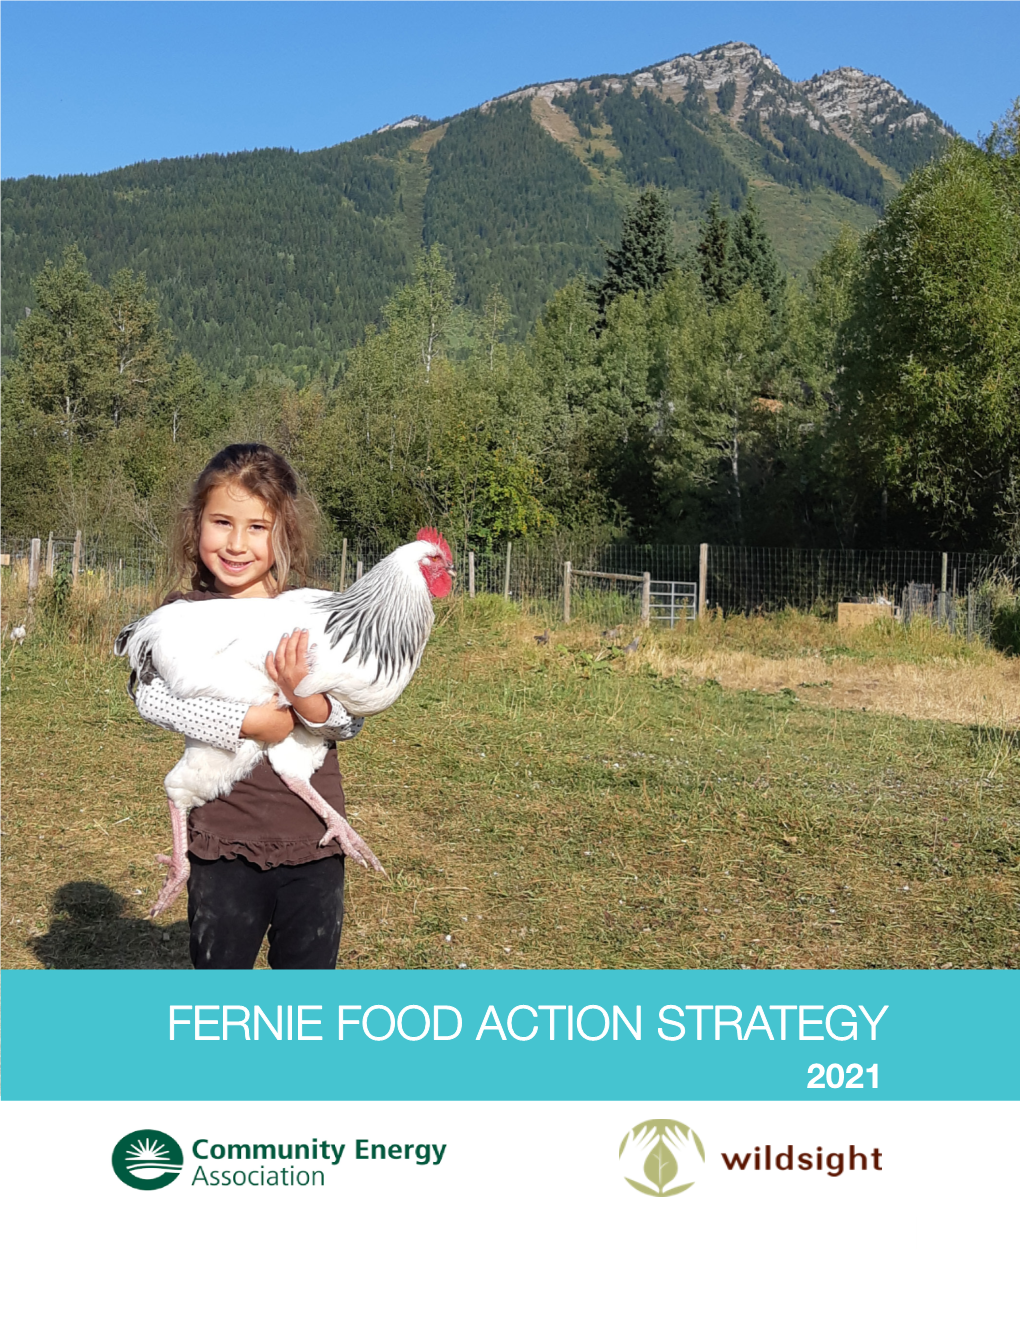 Fernie Food Action Strategy 2021